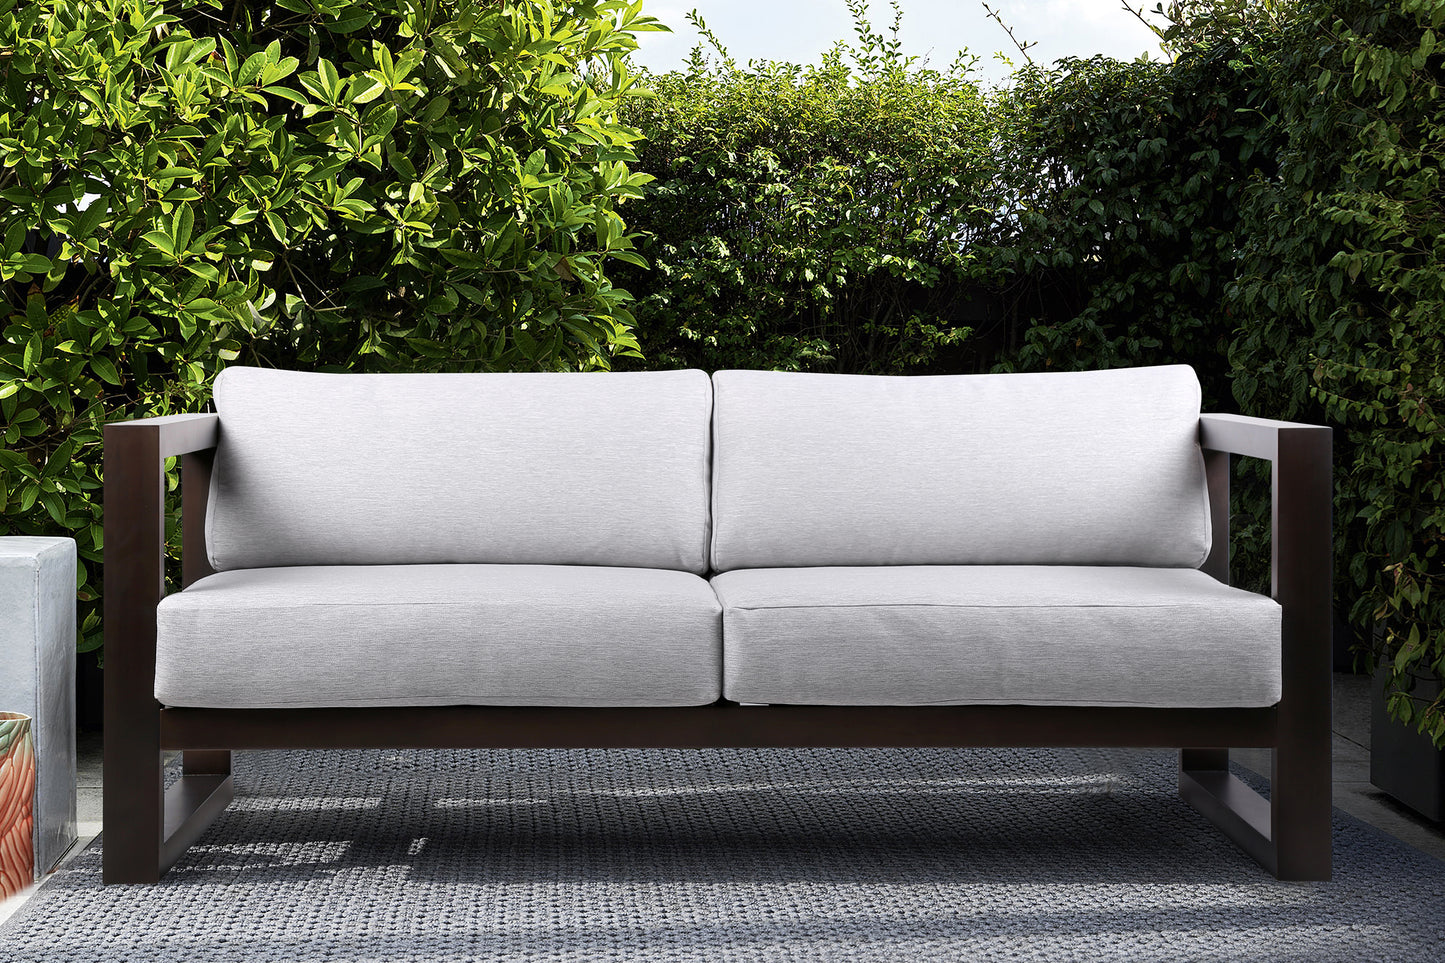 Paradise Outdoor Dark Eucalyptus Wood Sofa with Gray Cushions